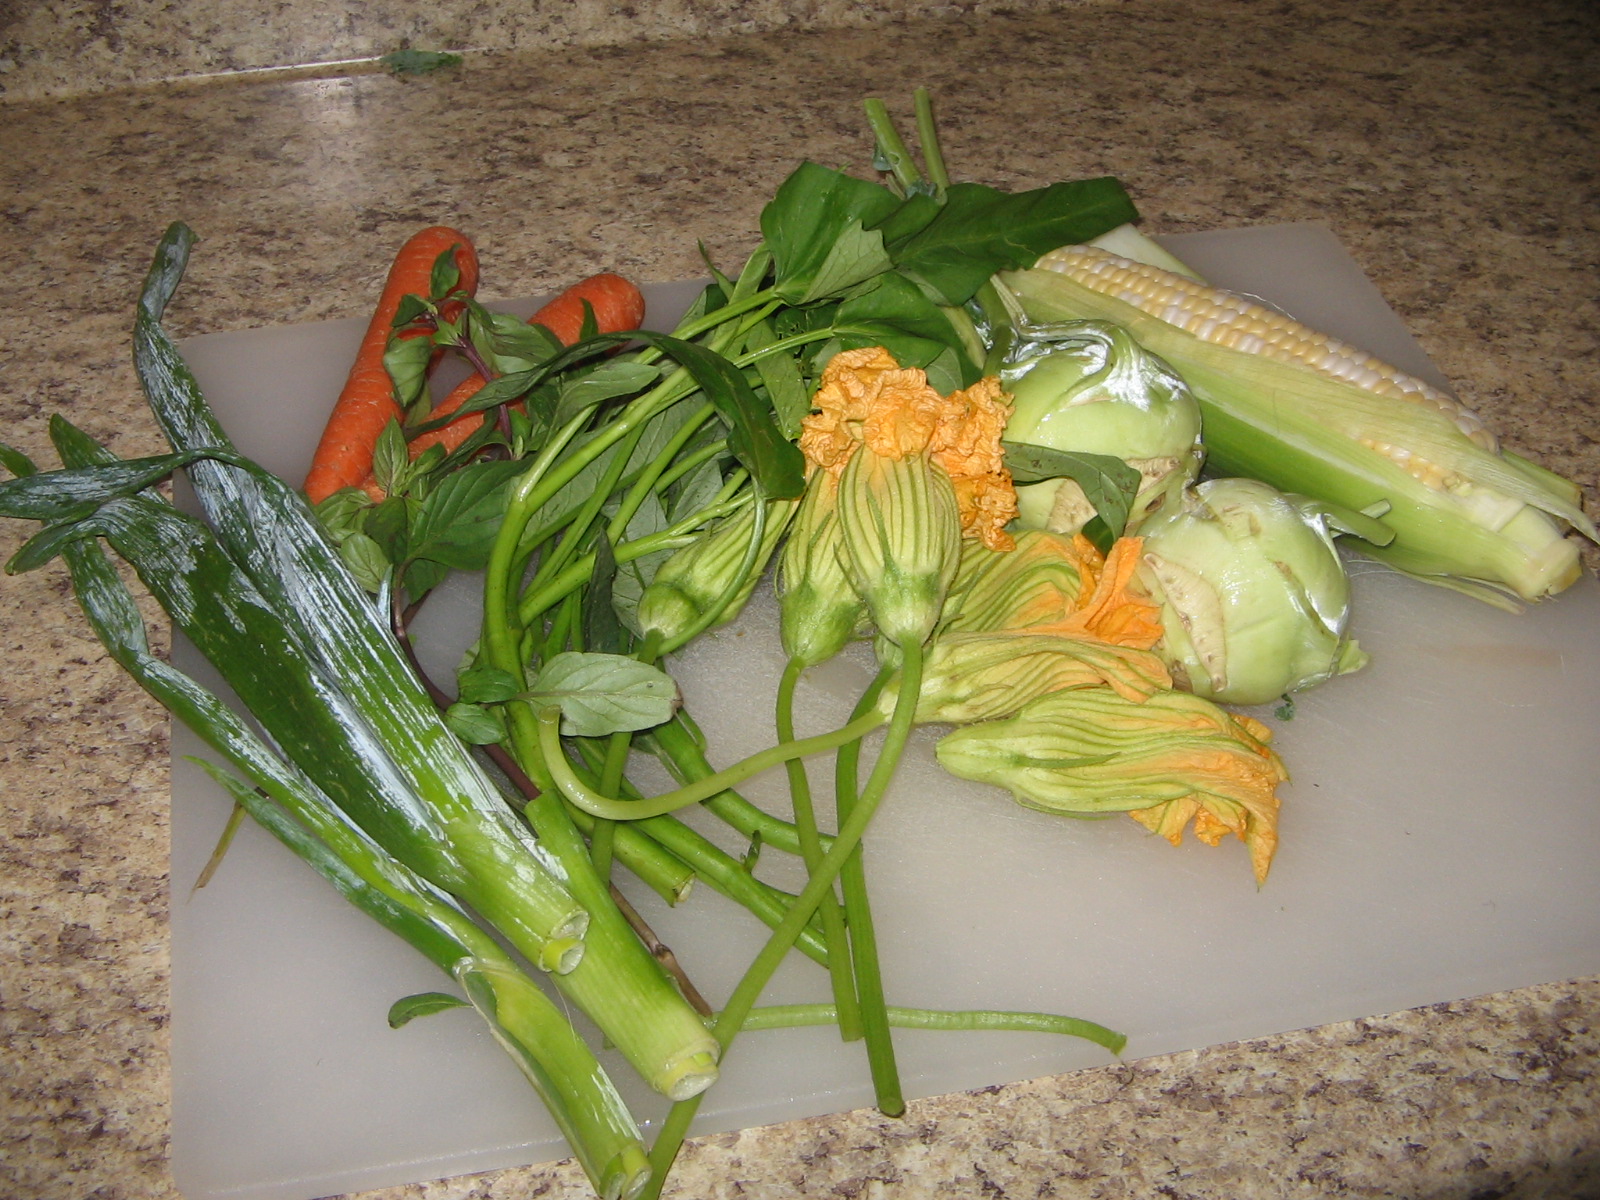 the veggies in the raw